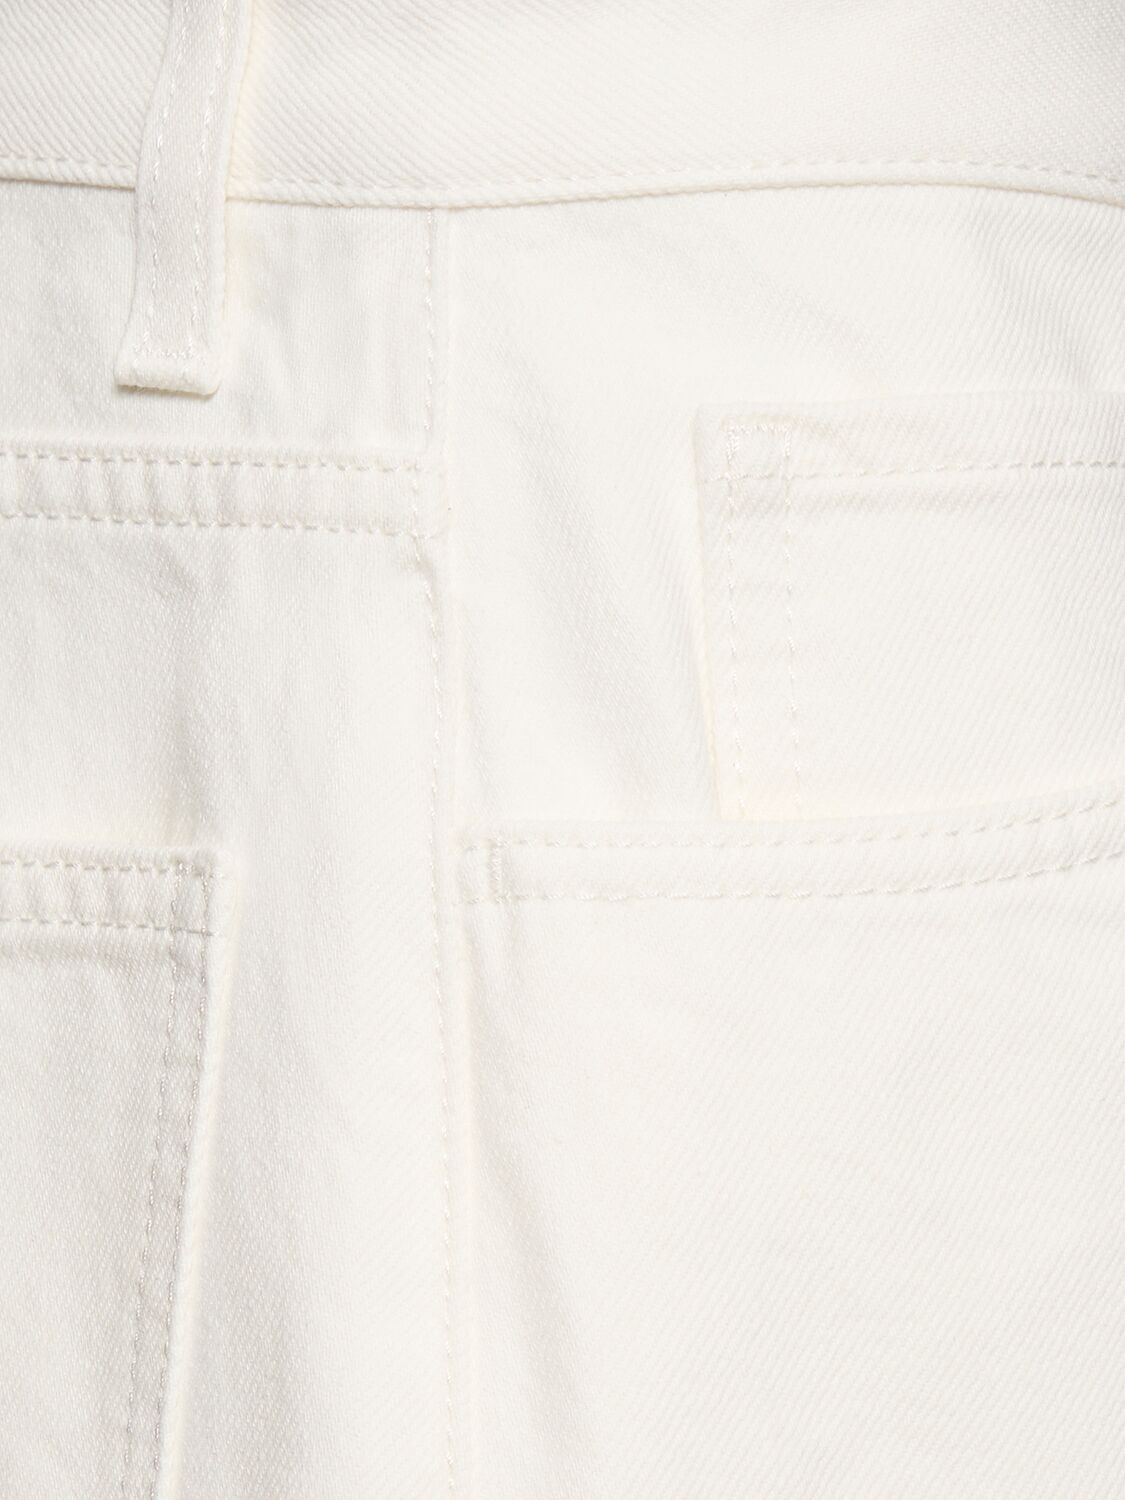 Shop The Row Eglitta Wide Cotton Denim Jeans In White